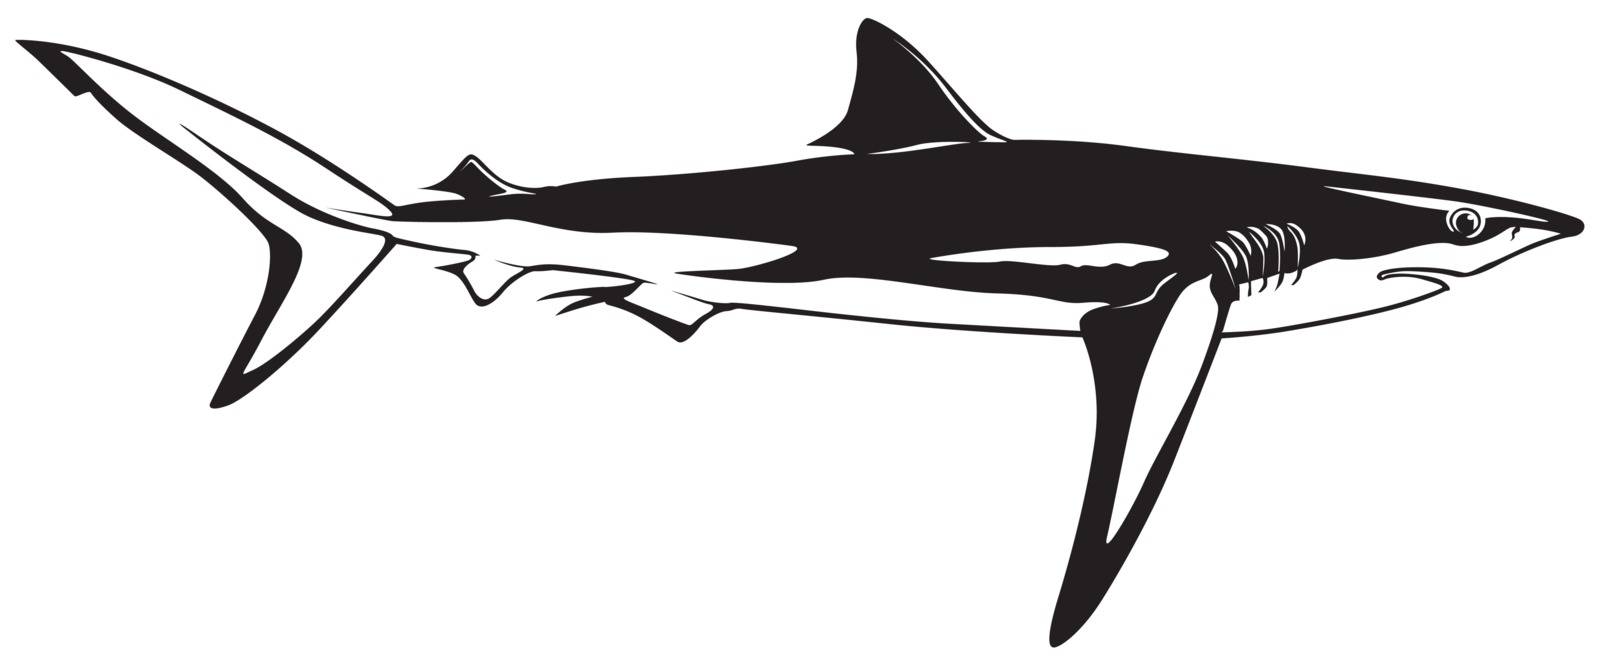 Blue Shark - Black Outline Illustration, Vector